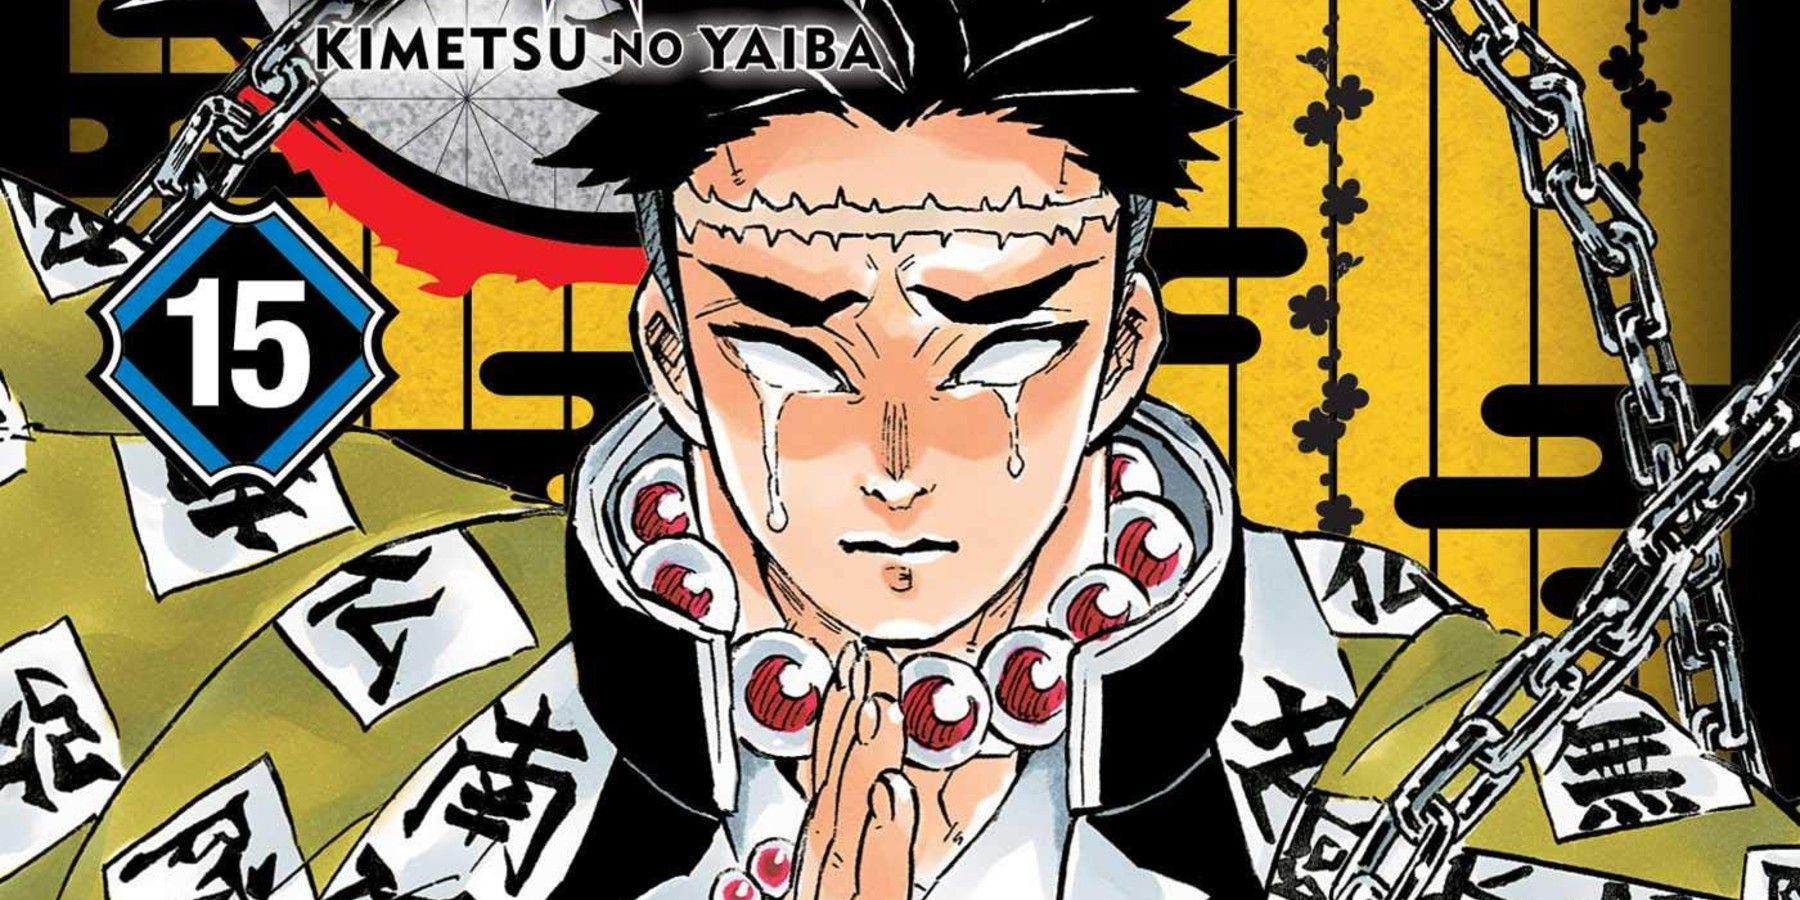 Kimetsu no Yaiba – 15 - Lost in Anime